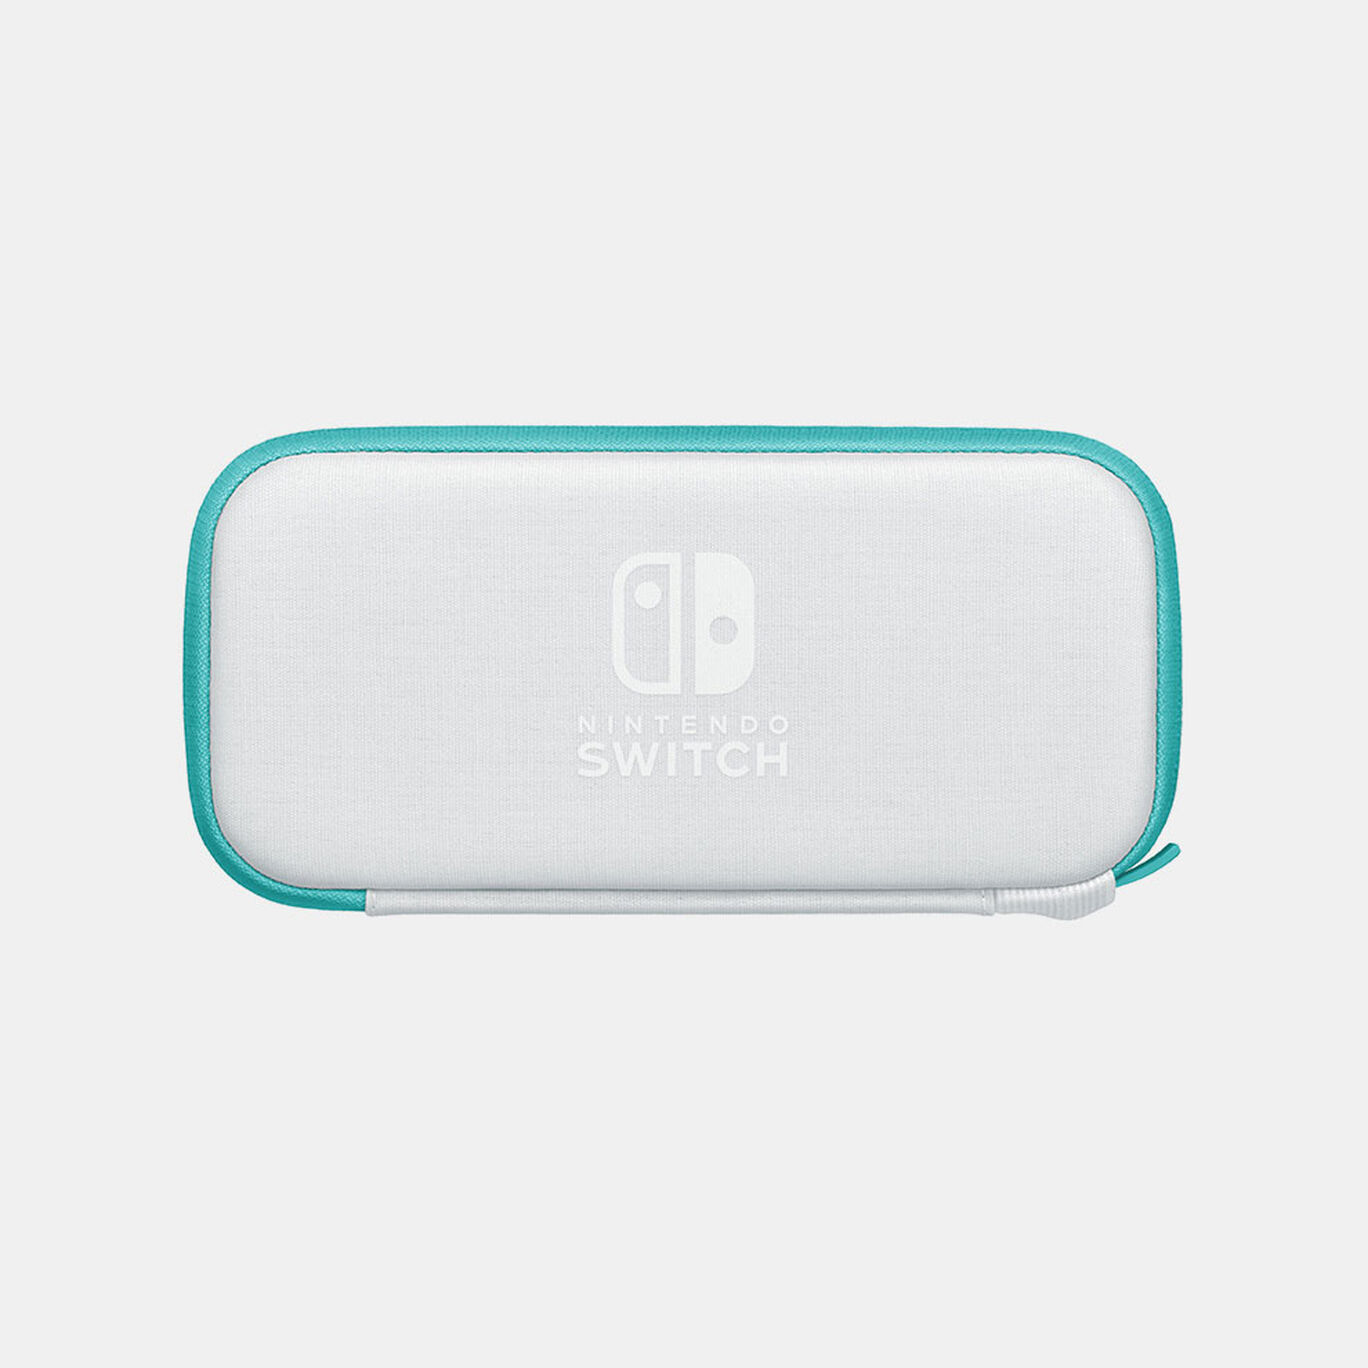 Nintendo Switch Liteキャリングケース ターコイズ 画面保護シート付き My Nintendo Store マイニンテンドーストア